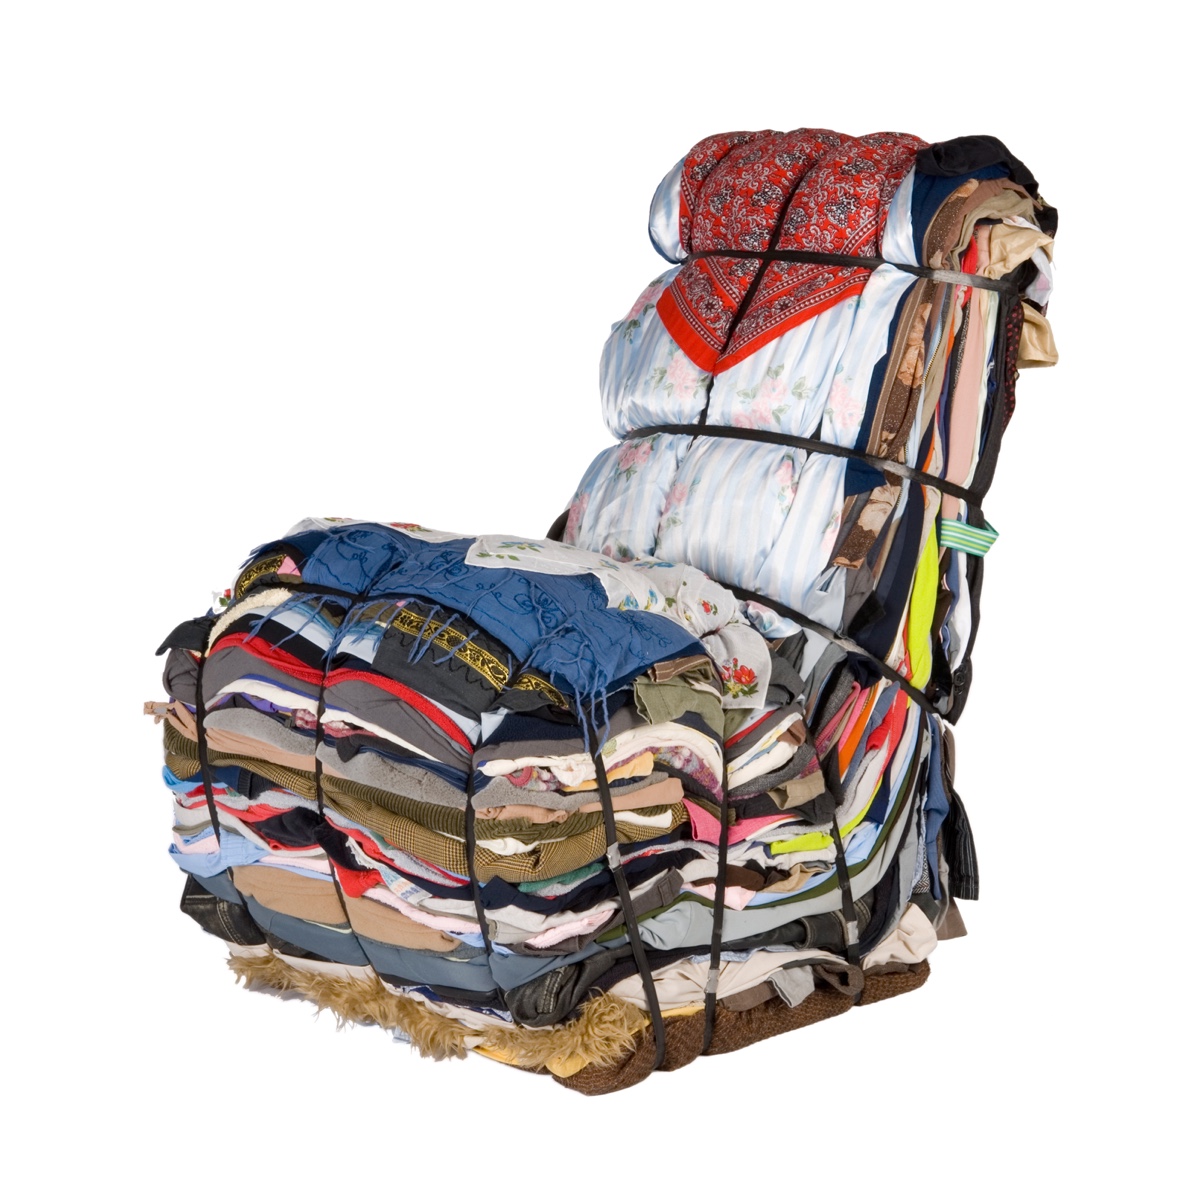 Rag chair by Tejo Remy.